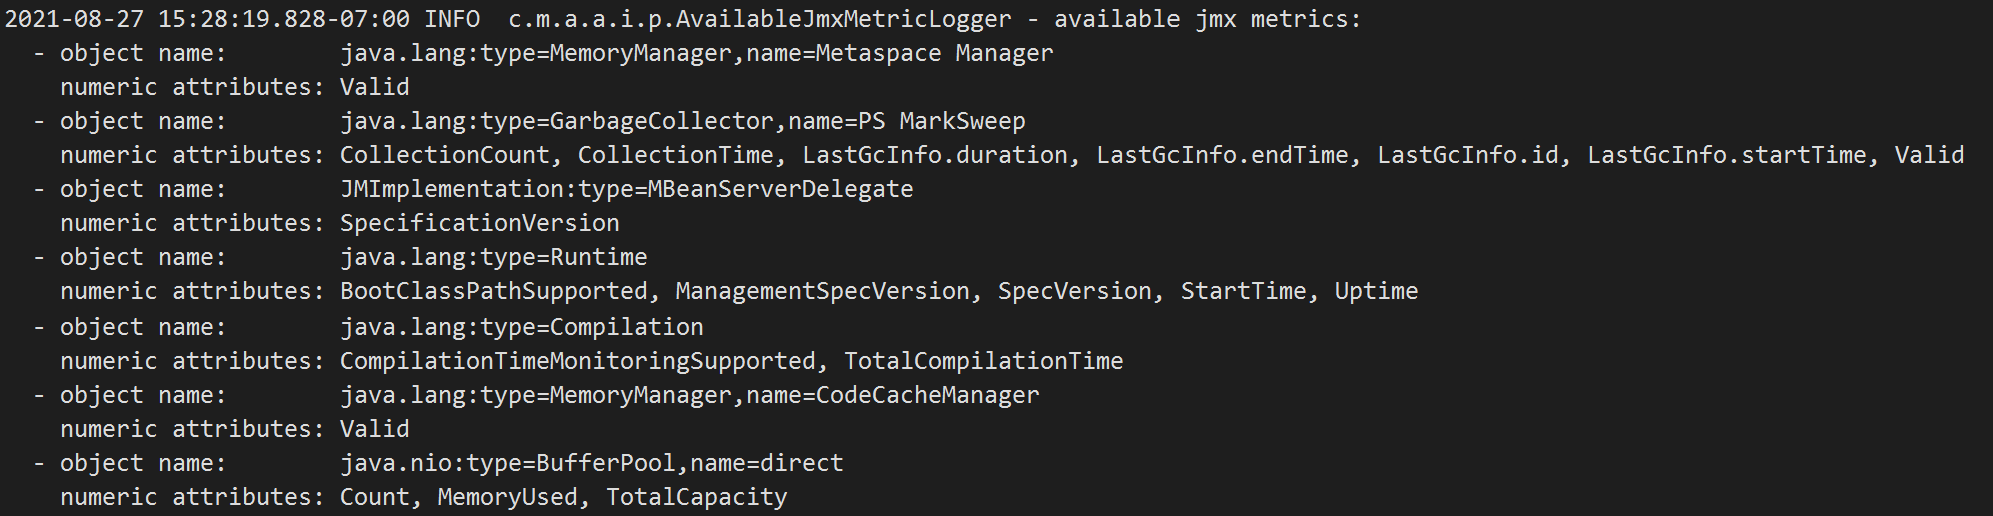 Screenshot of available JMX metrics in the log file.